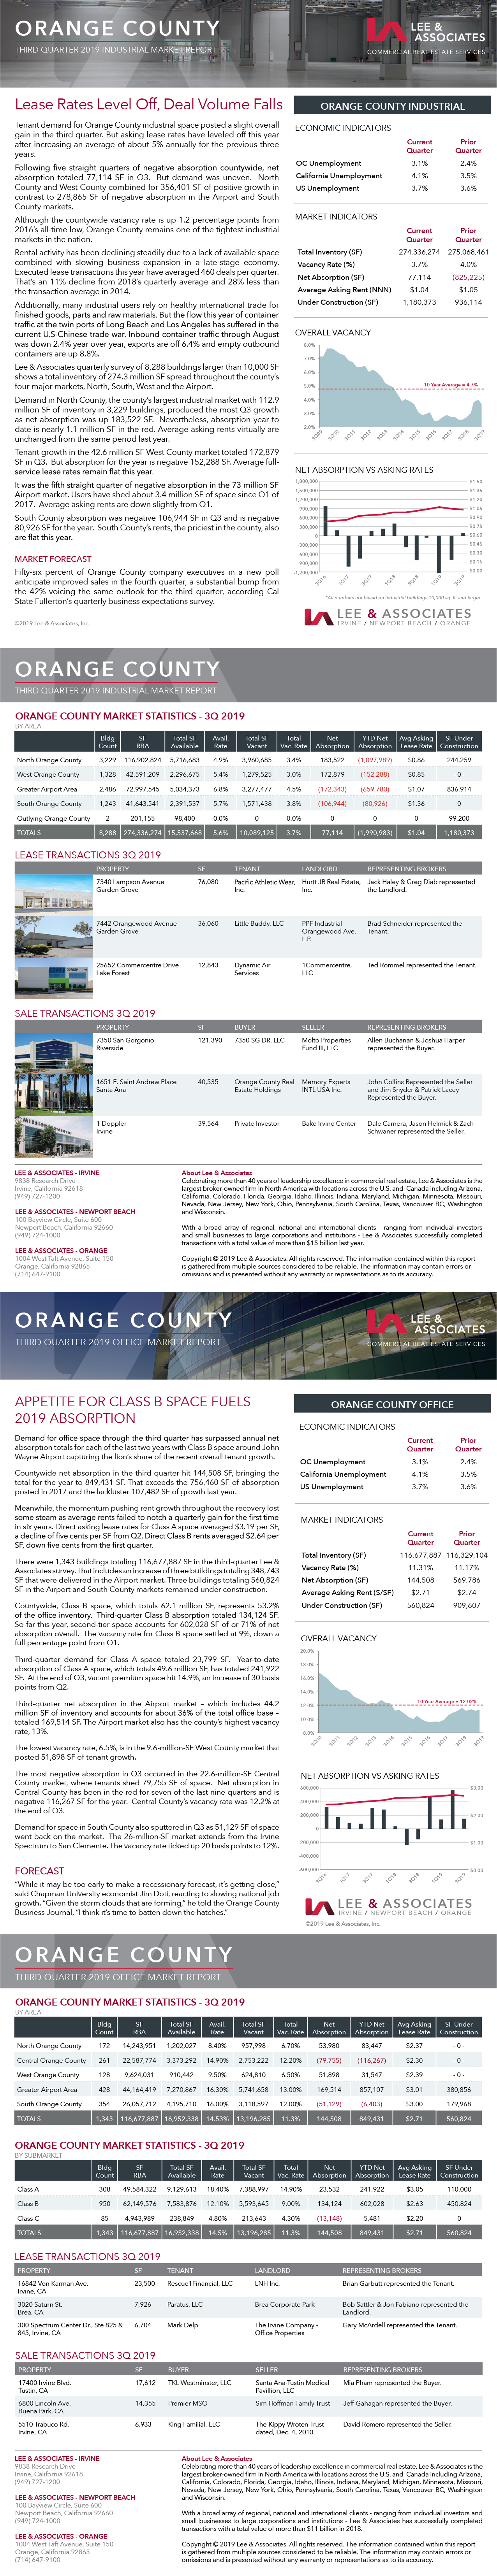 Orange County Market Report